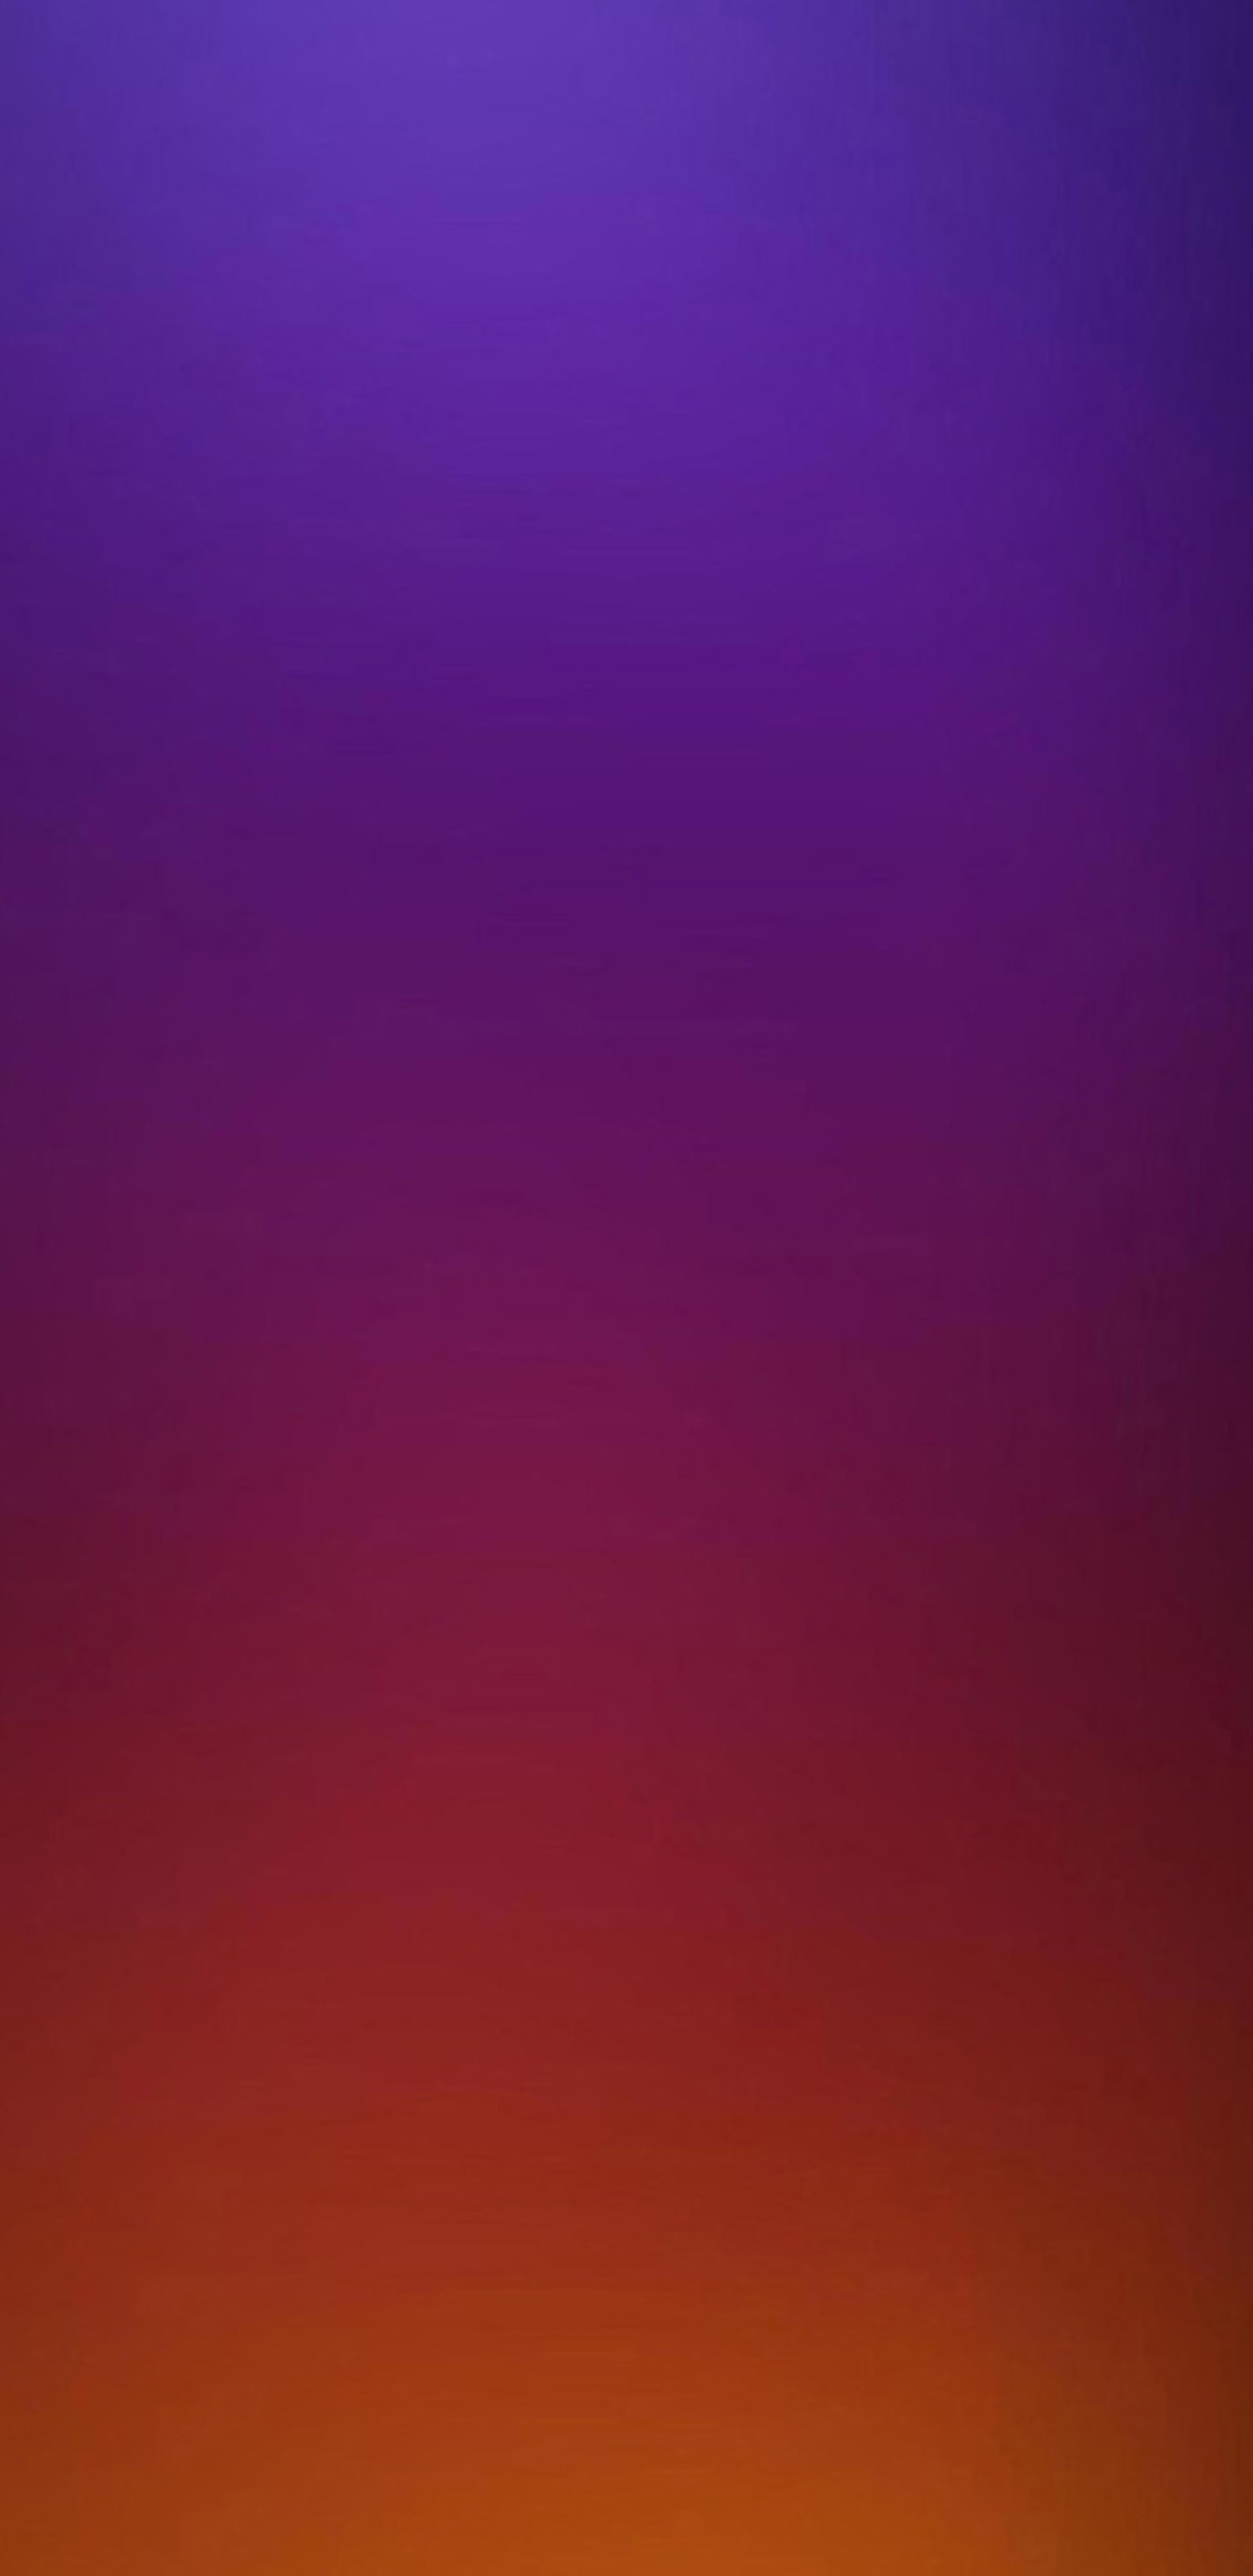 fond d'écran samsung galaxy s8,ciel,violet,violet,bleu,rouge